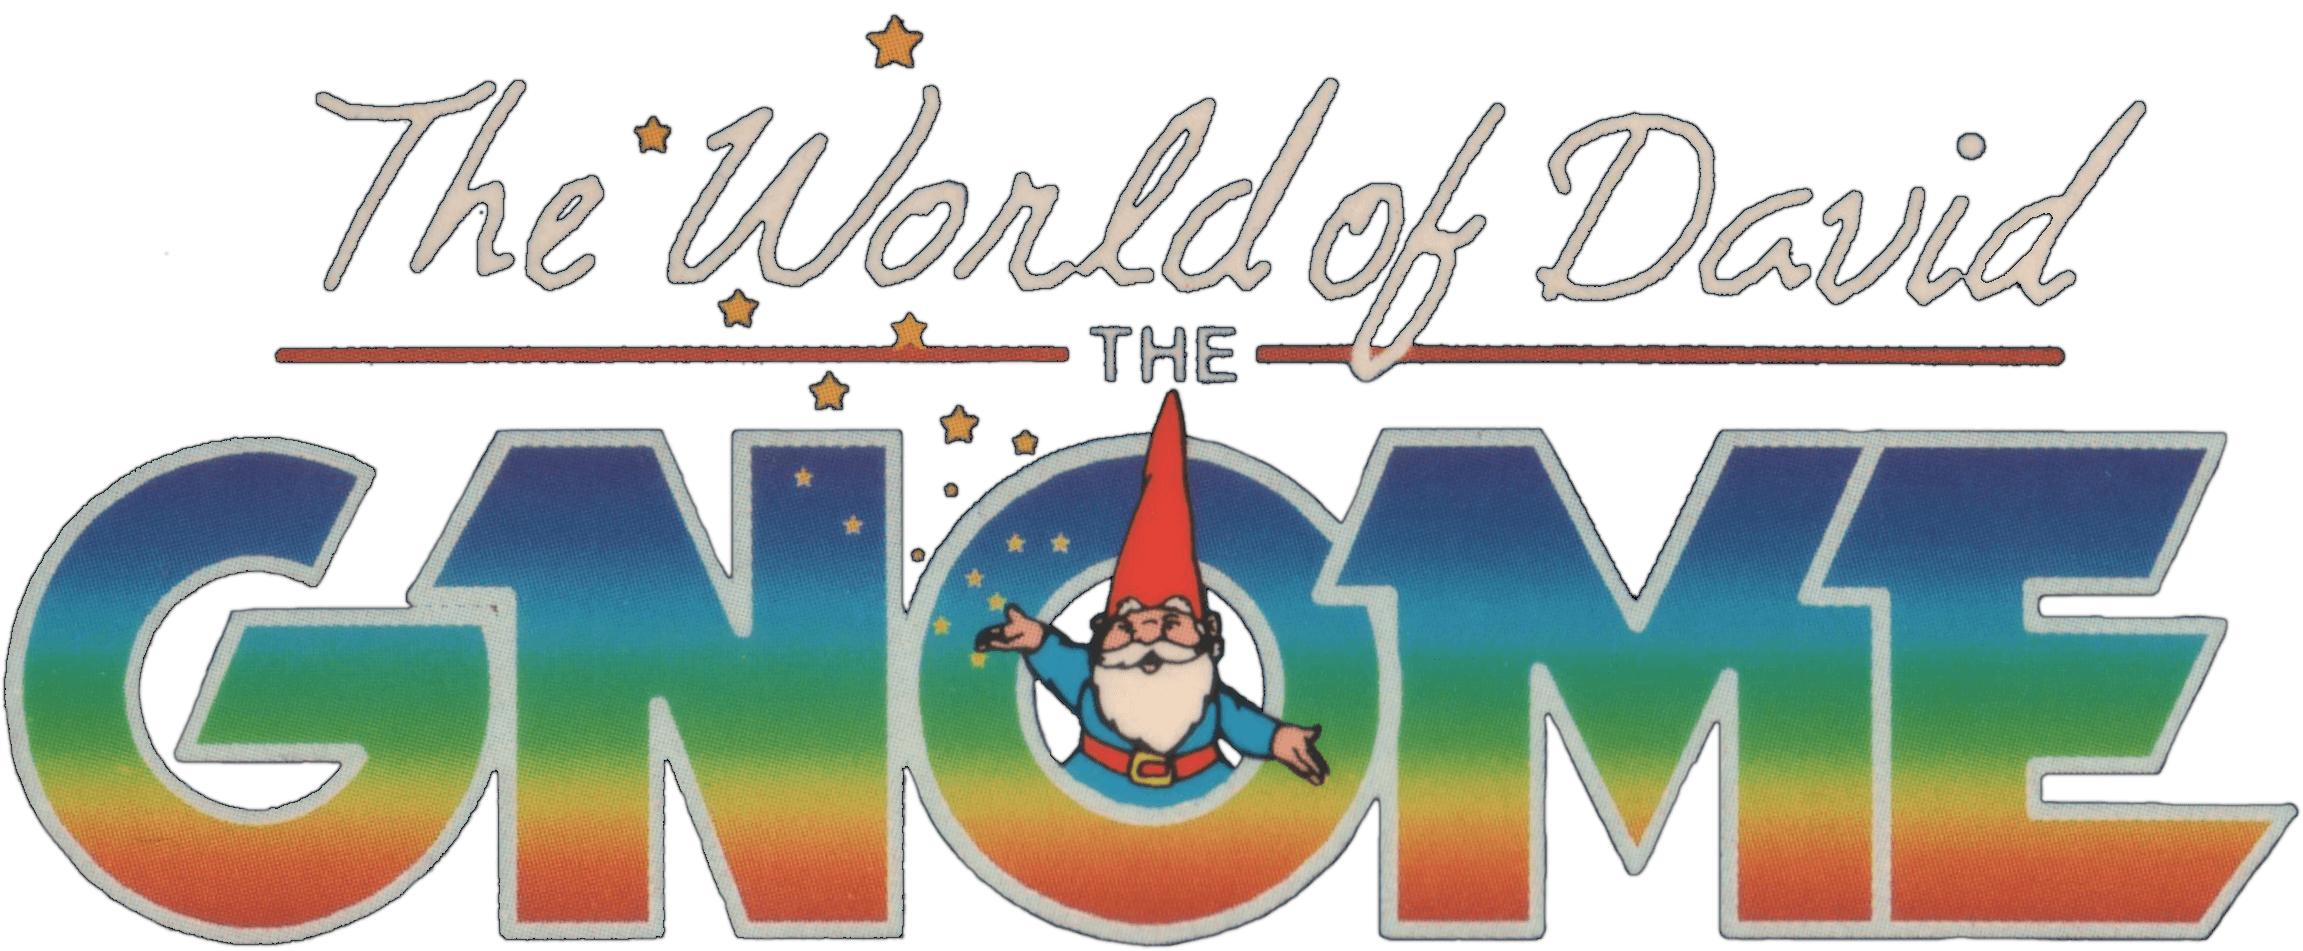 The World of David the Gnome logo